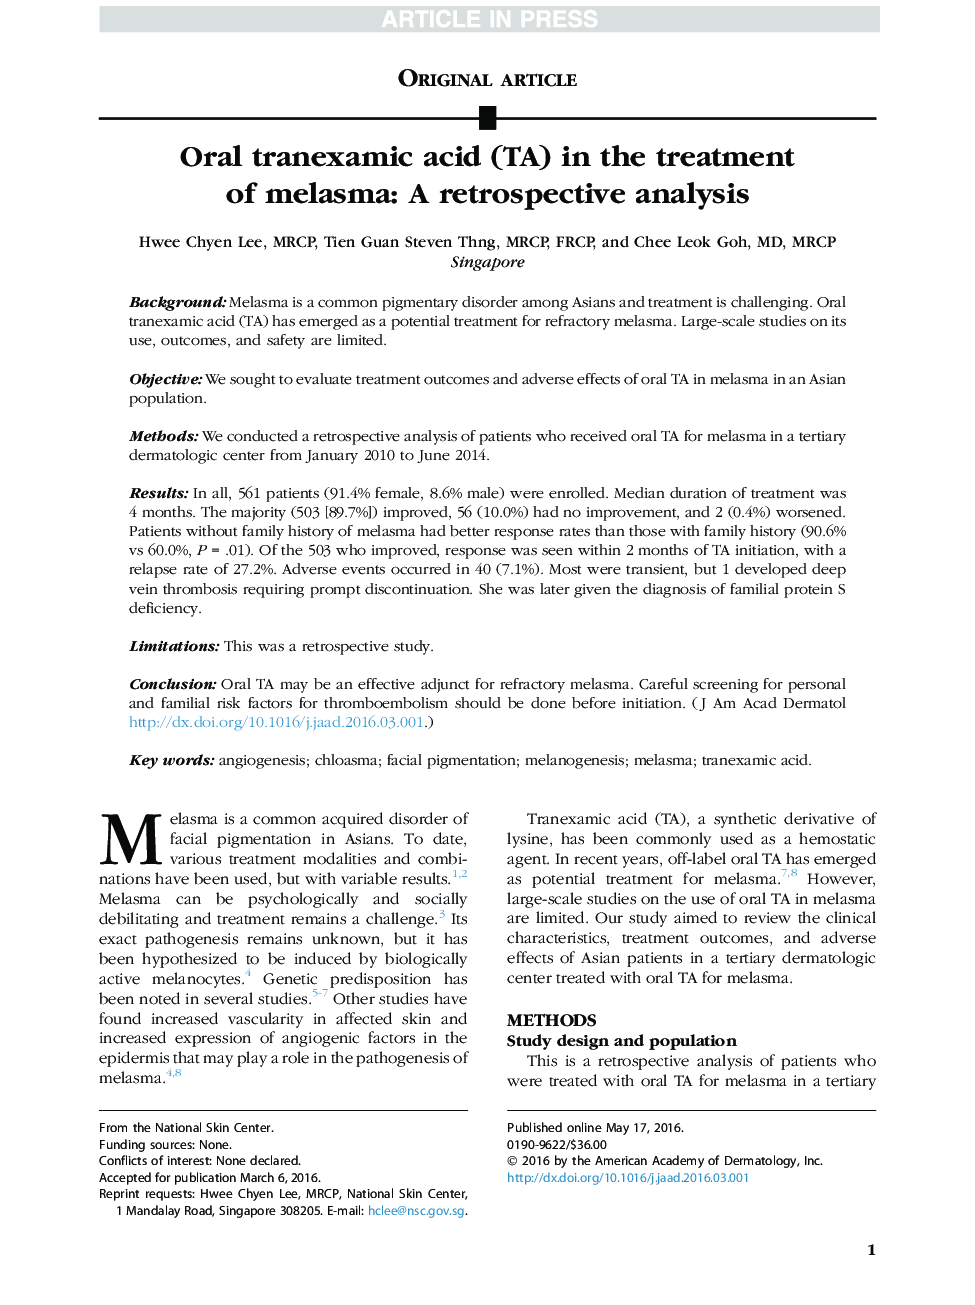 Oral tranexamic acid (TA) in the treatment of melasma: A retrospective analysis